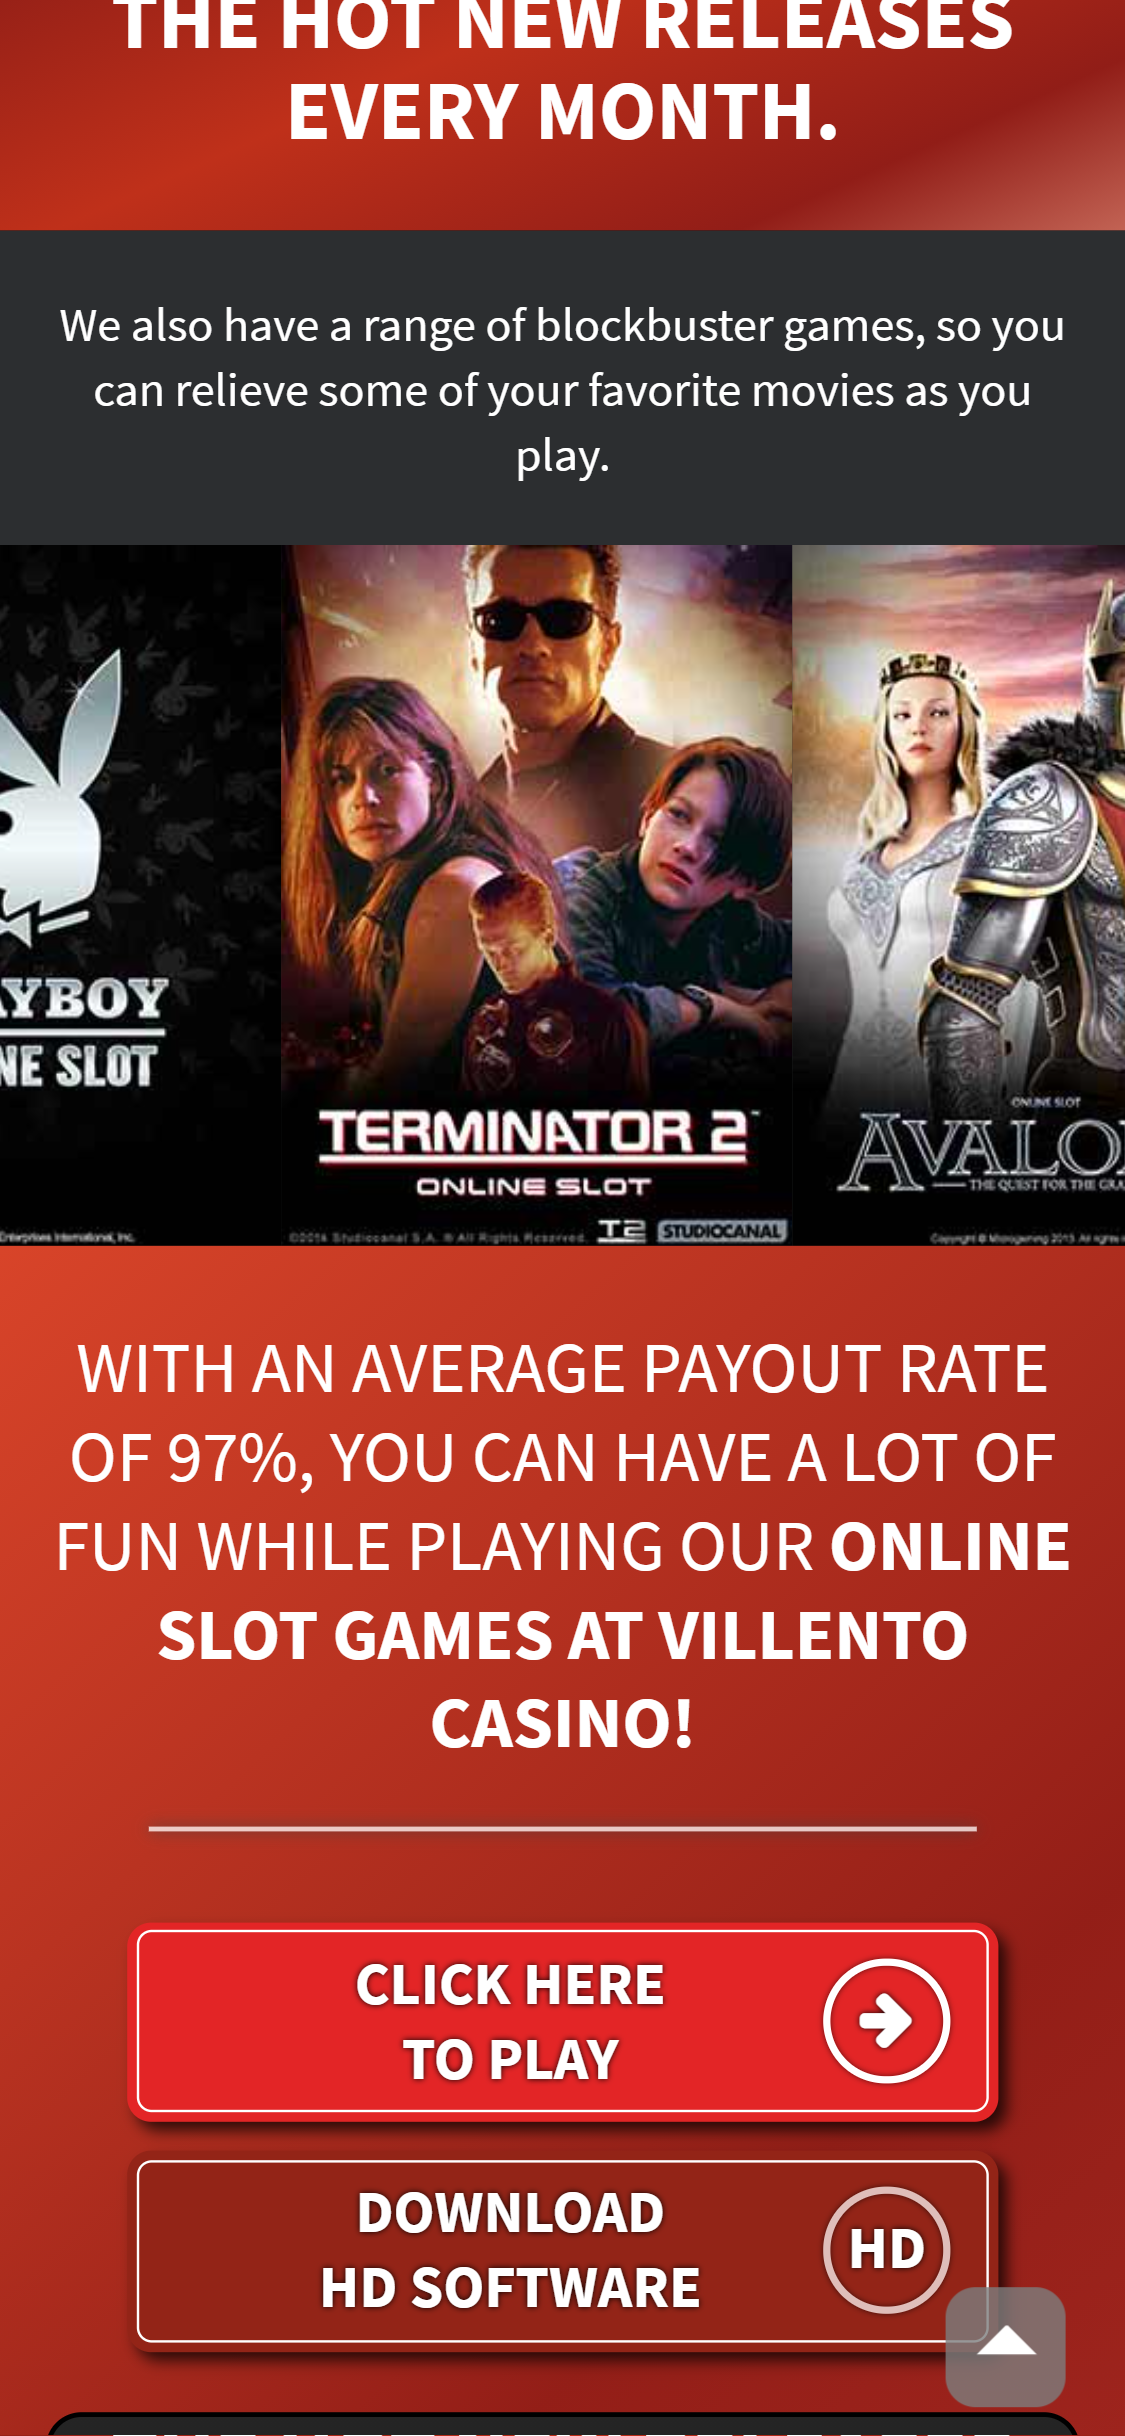 Villento Casino Mobile Games Review